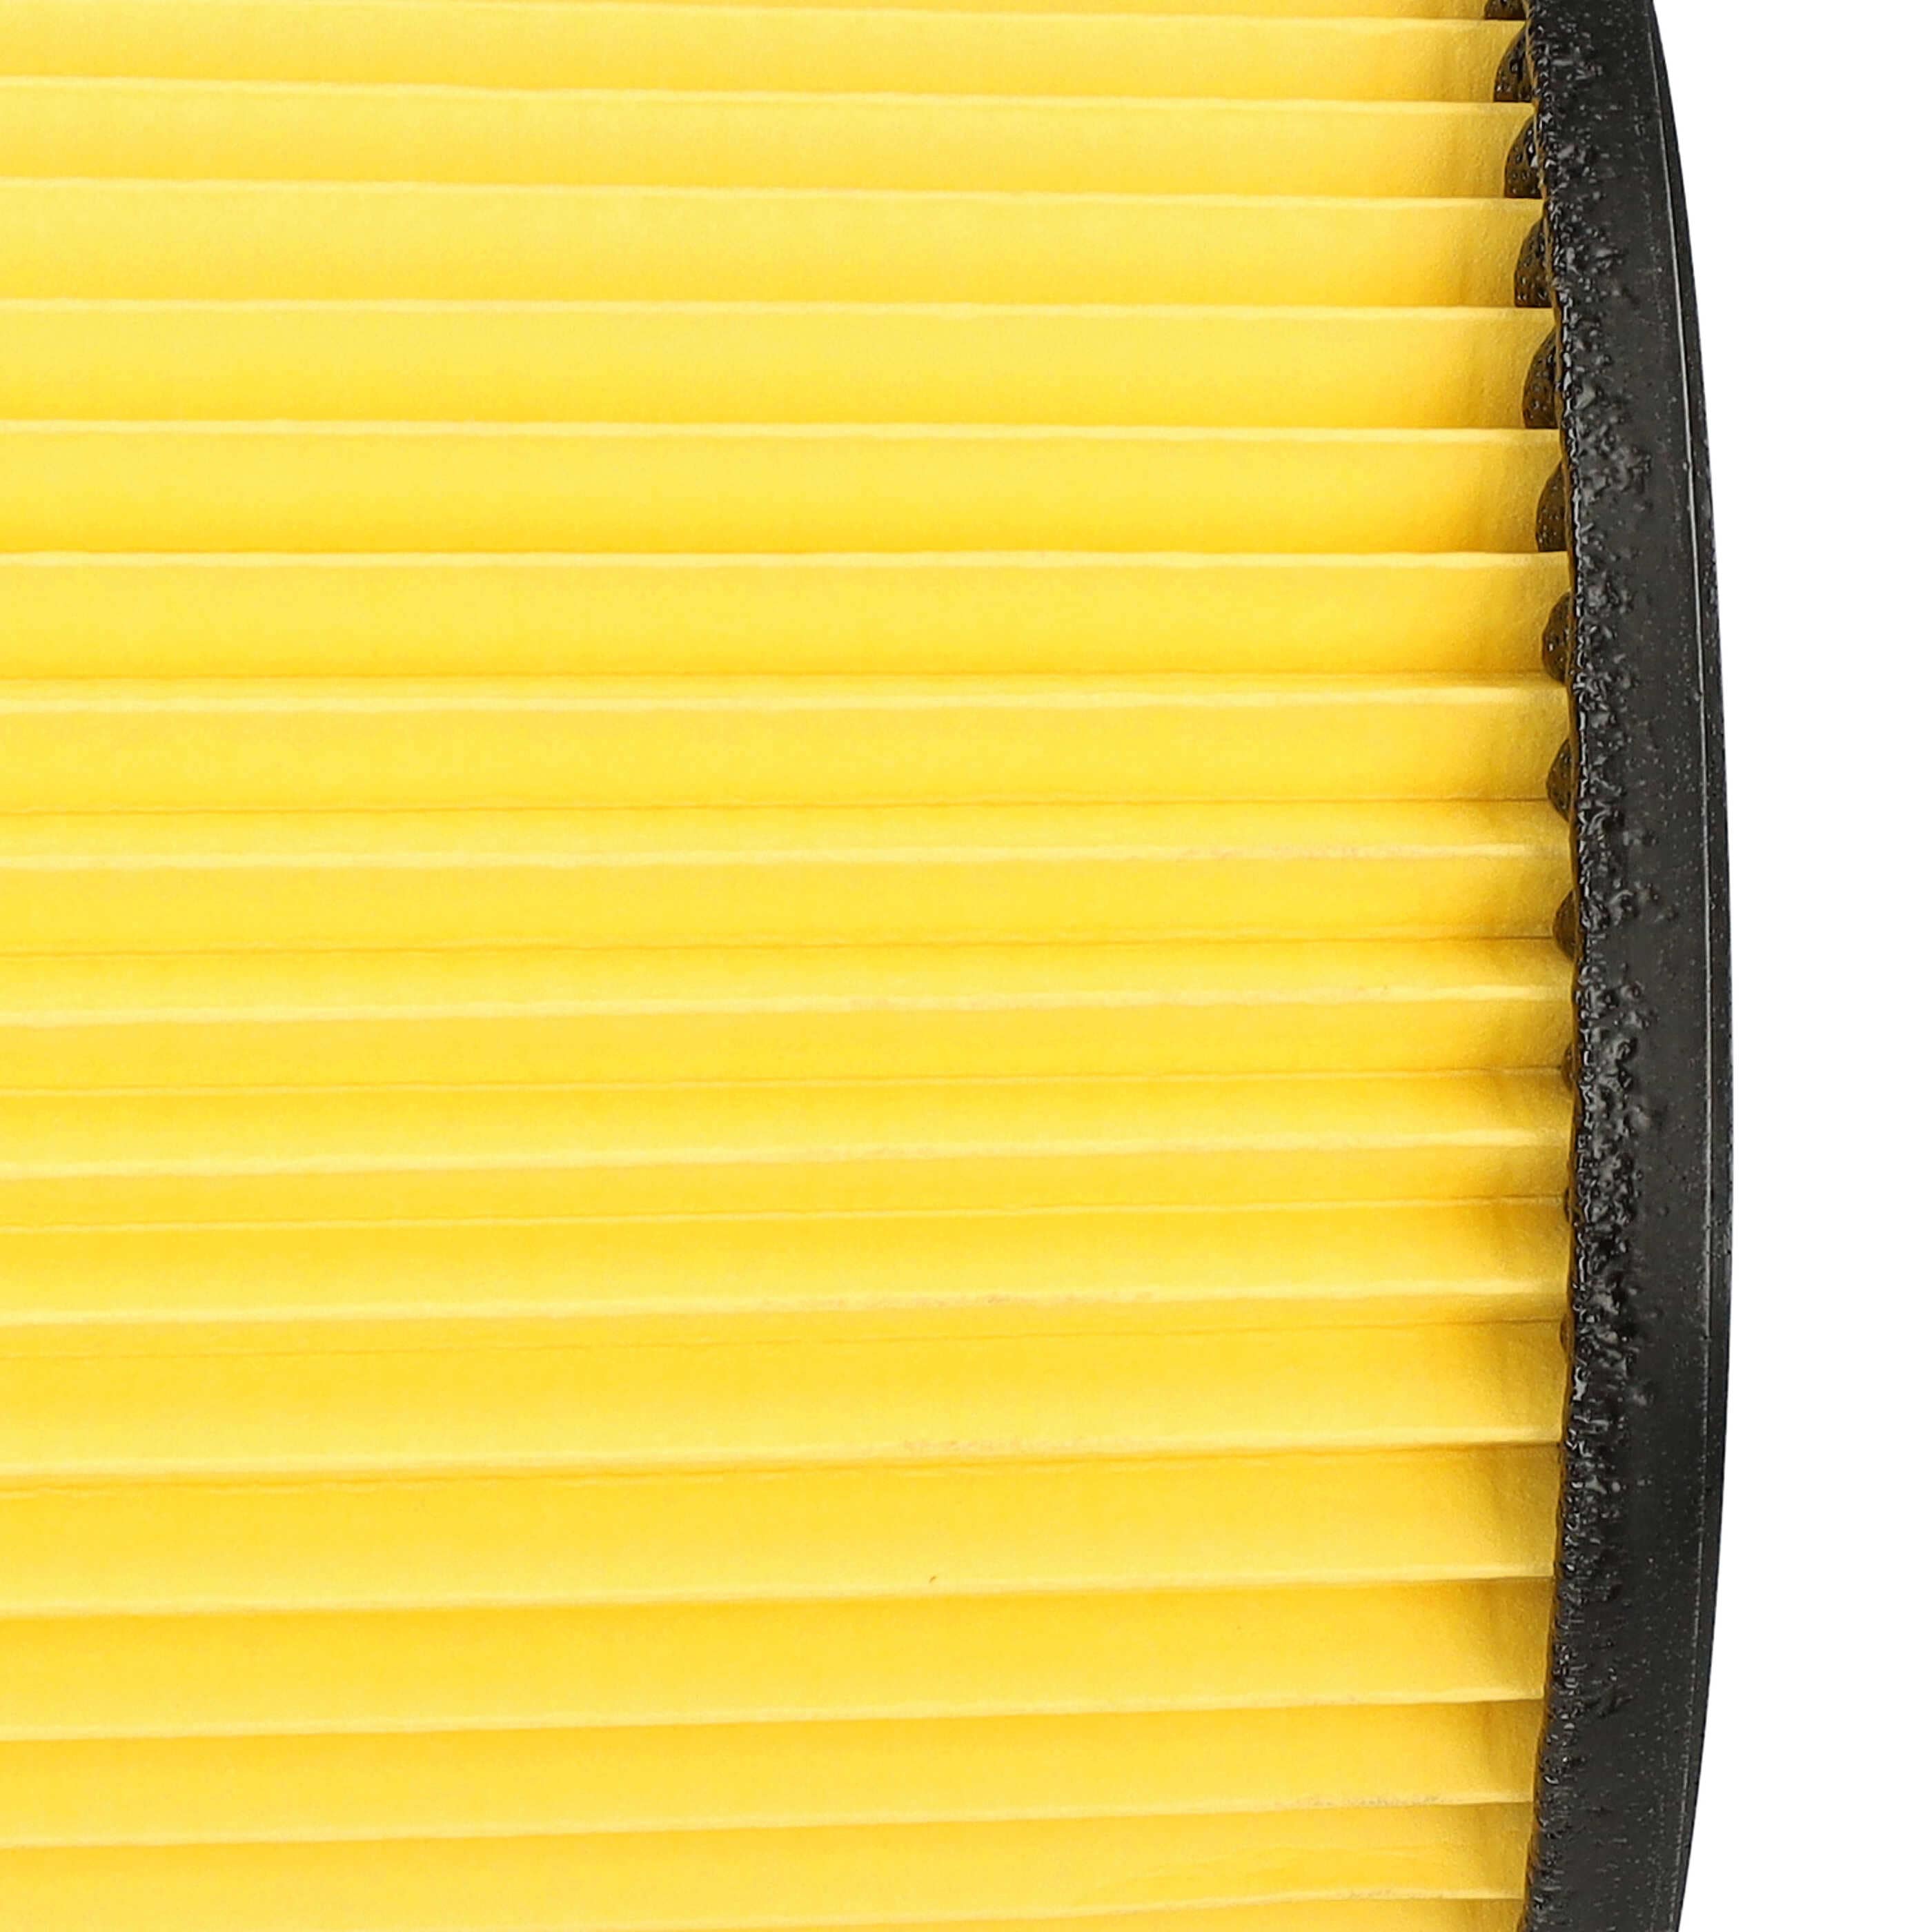 Filtro reemplaza Einhell 23.424.25, 23.421.75, 23.421.67 para aspiradora filtro plisado, negro / amarillo